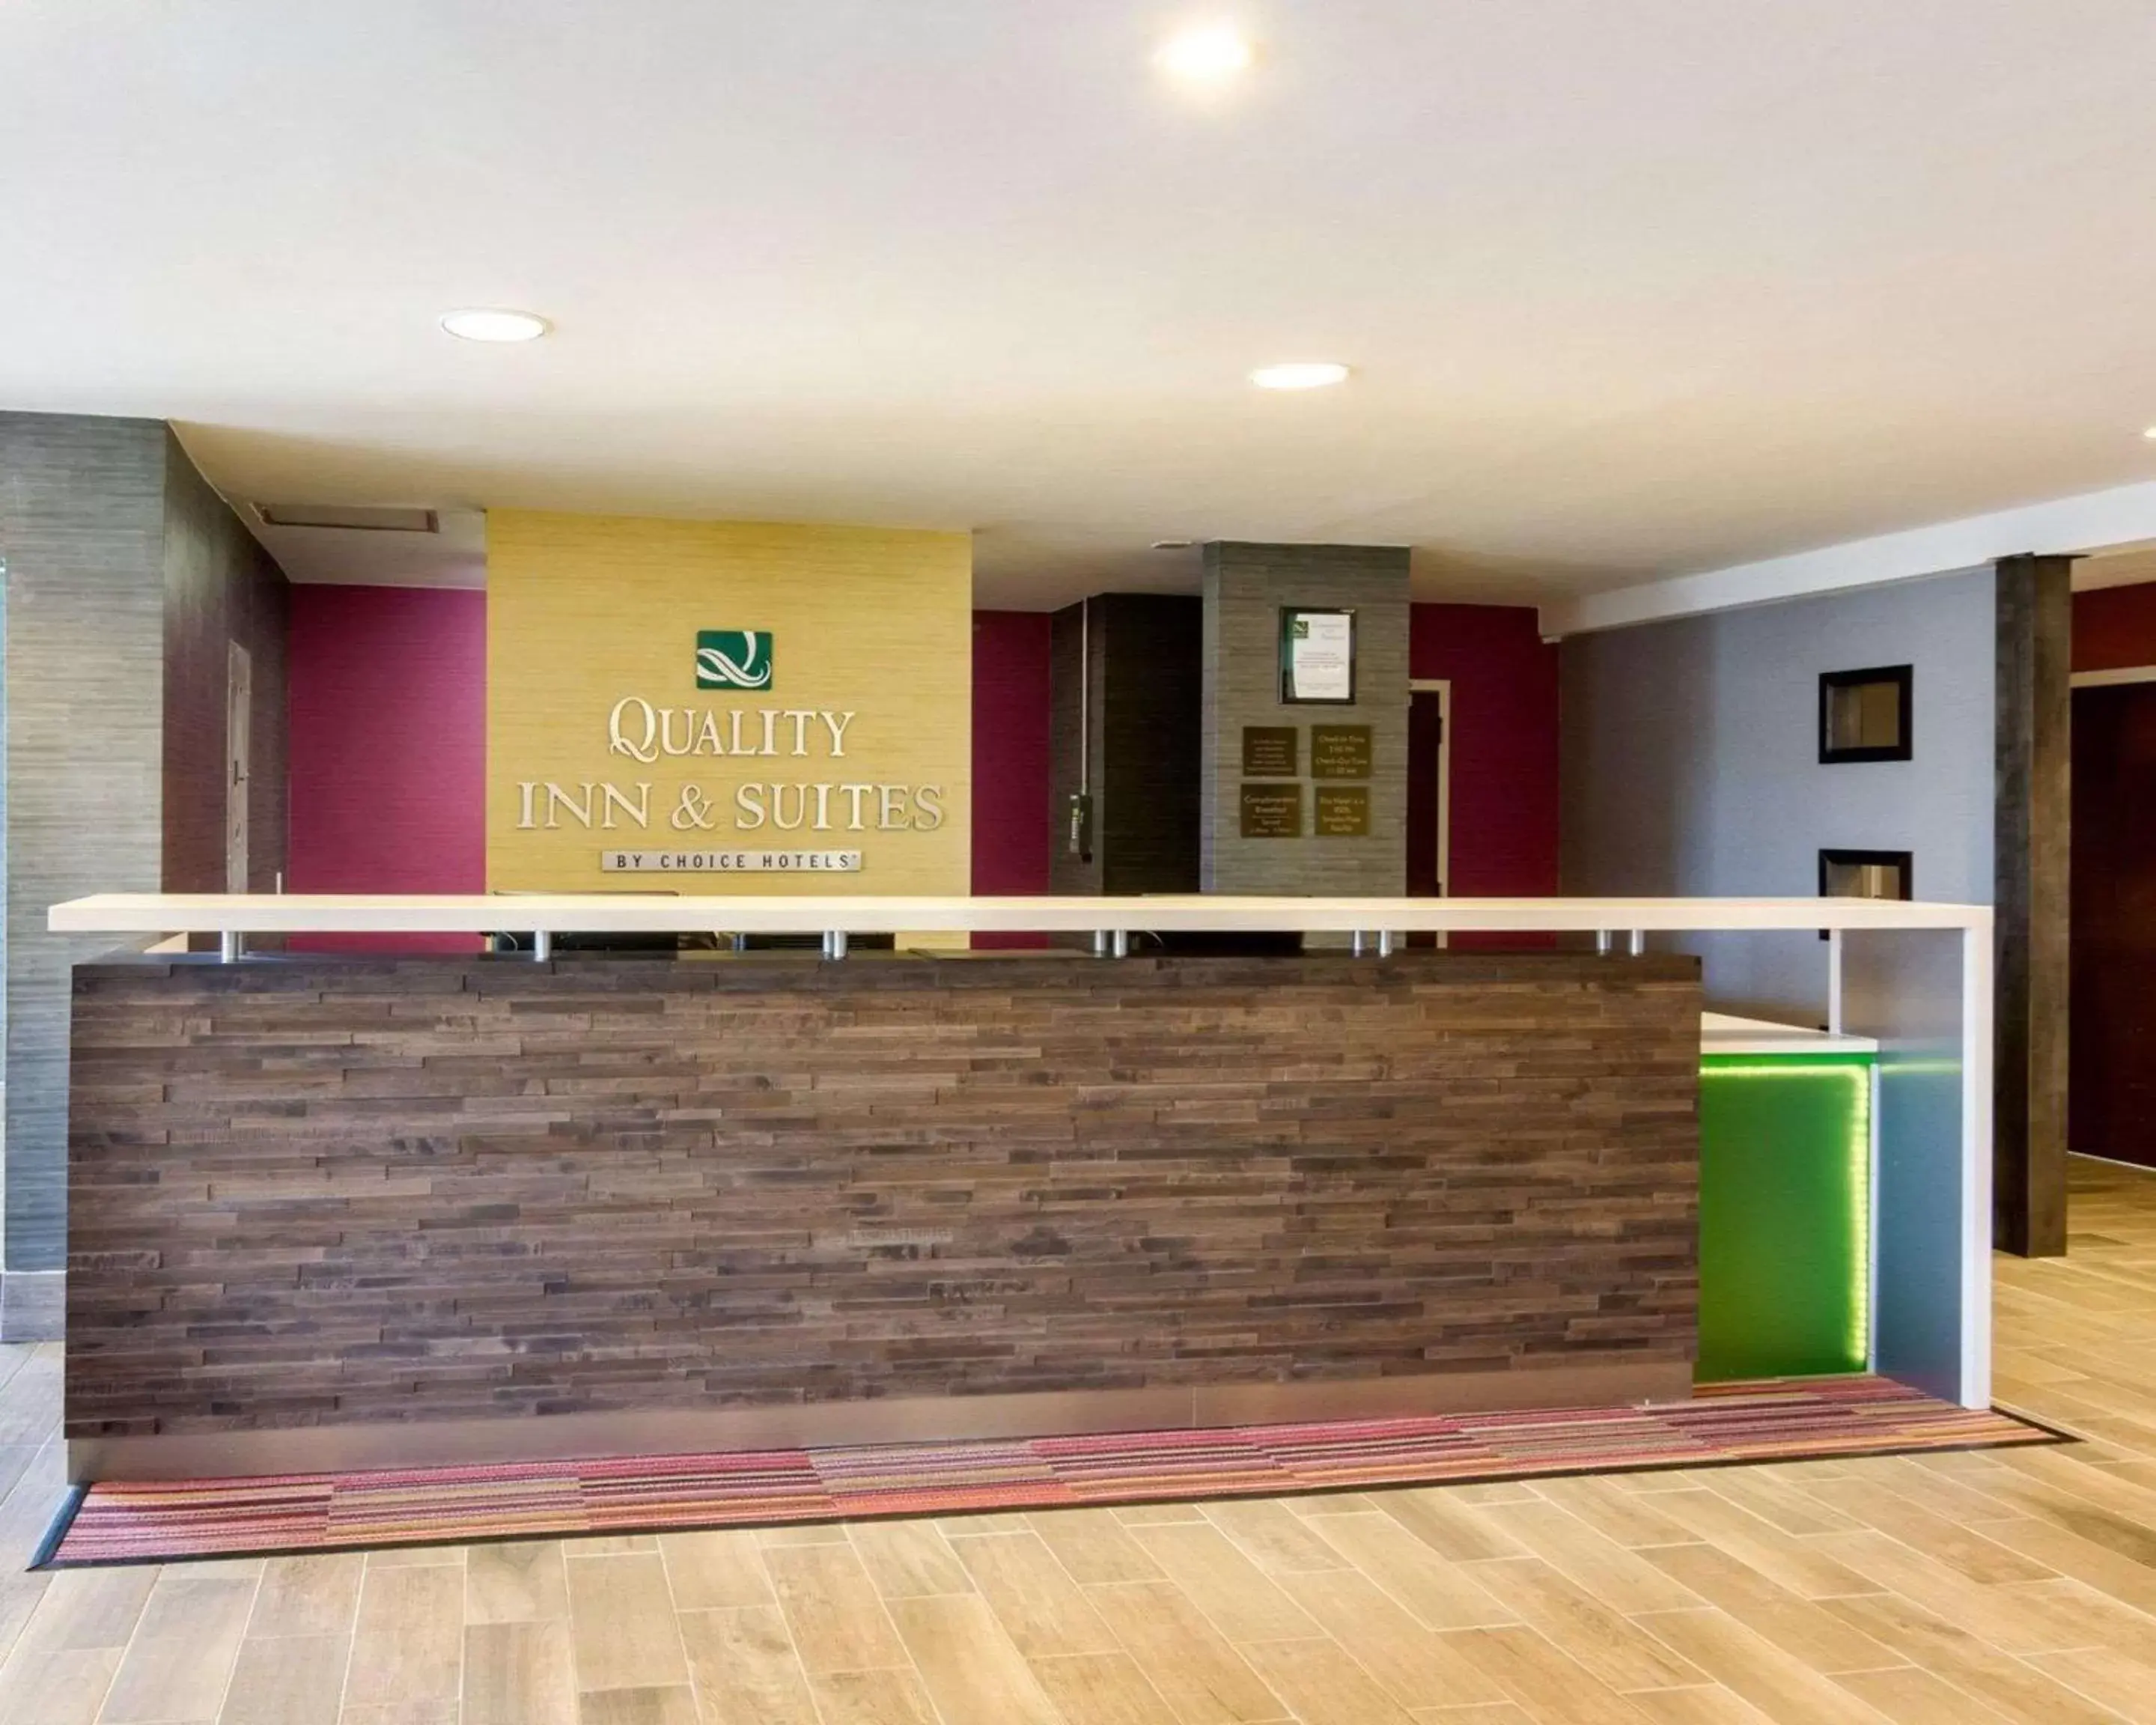 Lobby or reception, Lobby/Reception in Quality Inn & Suites Ashland near Kings Dominion